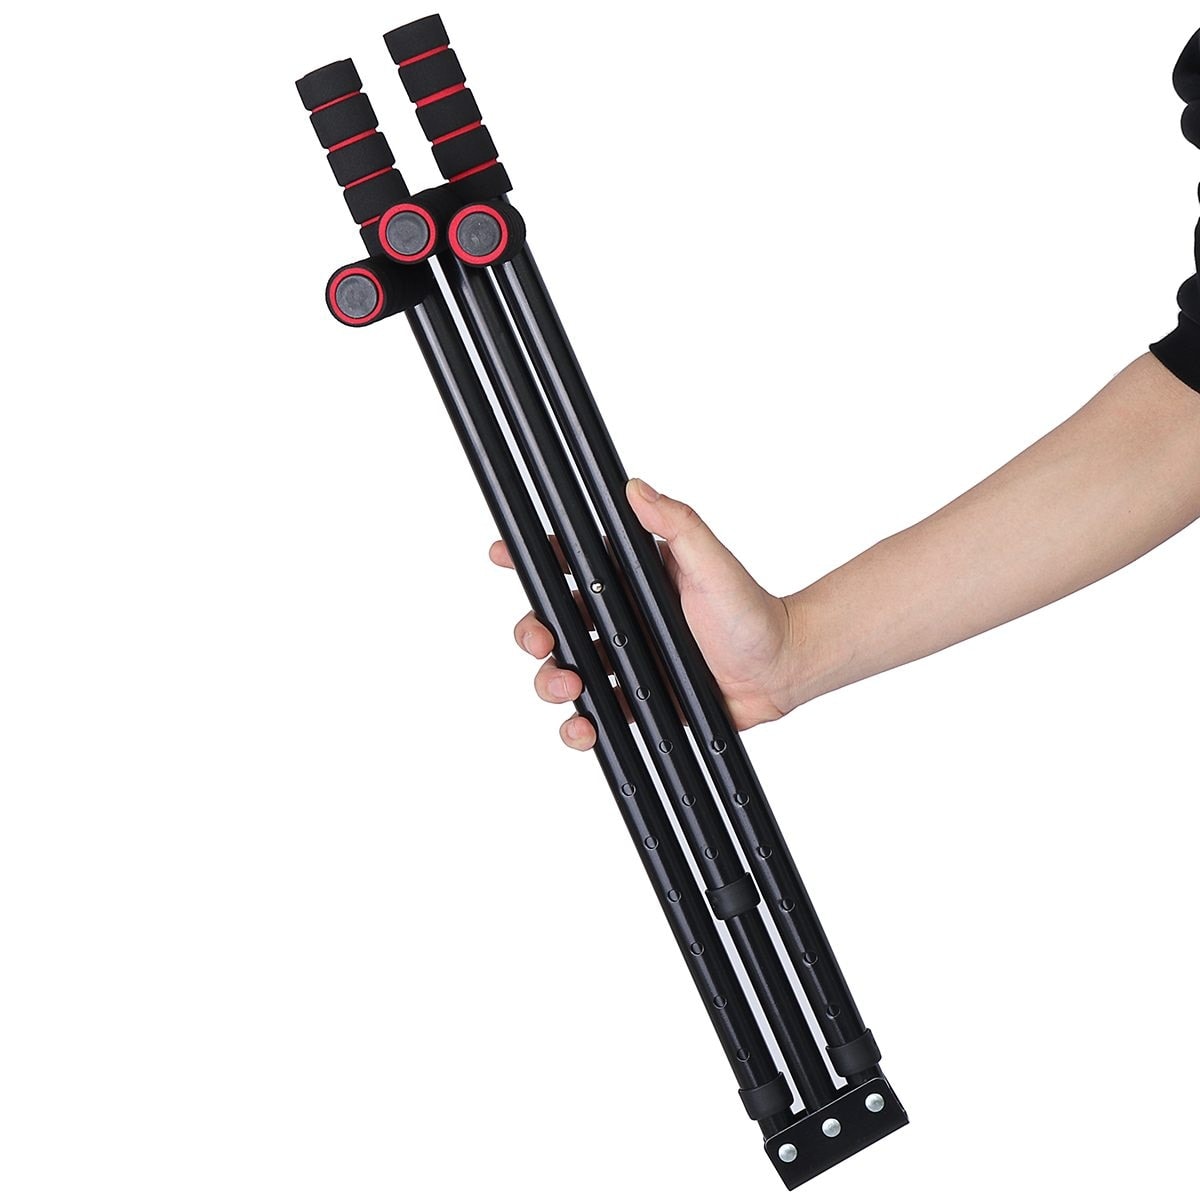 Adjustable 3 Bar Iron Legs Stretcher Extension Split Ligament Machine Split Legs Training Tool Fitness Equipment Accessories